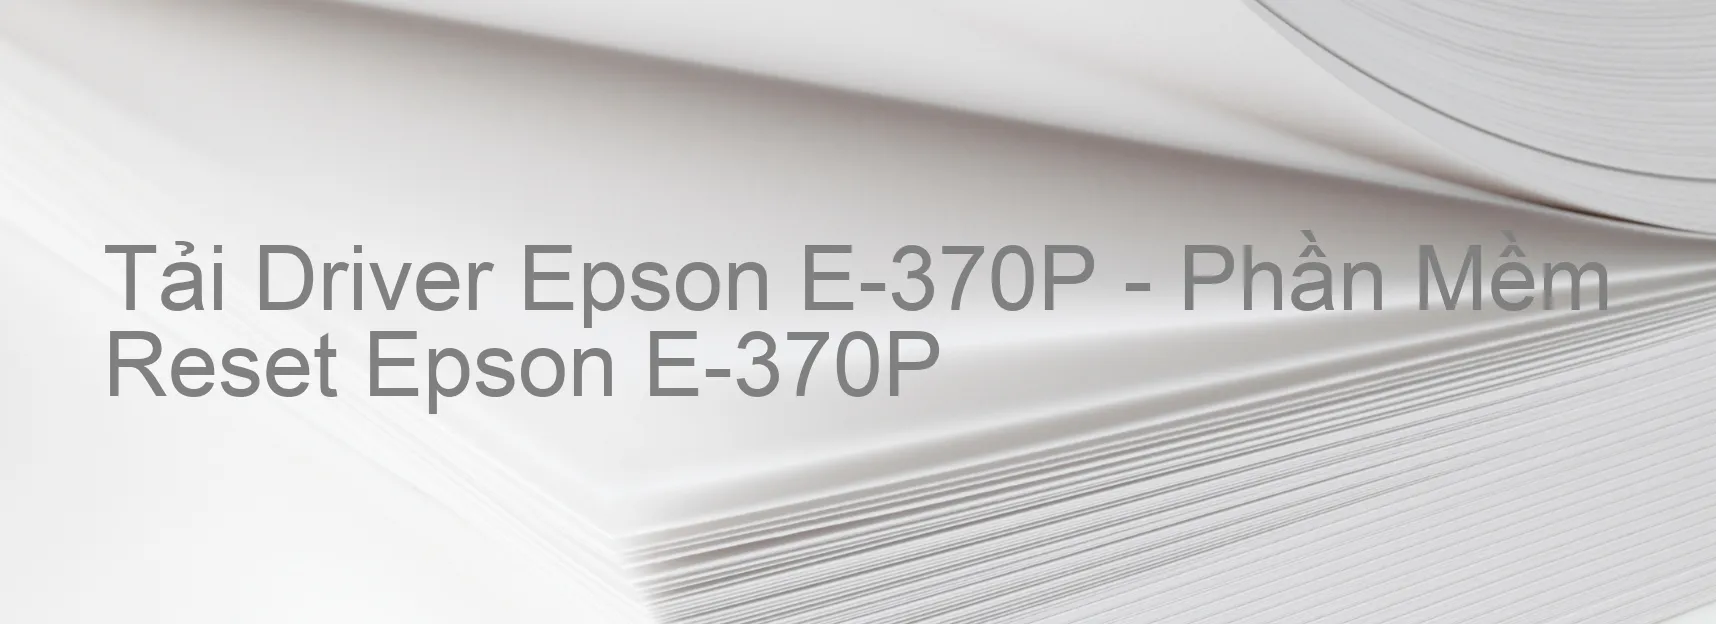 Driver Epson E-370P, Phần Mềm Reset Epson E-370P